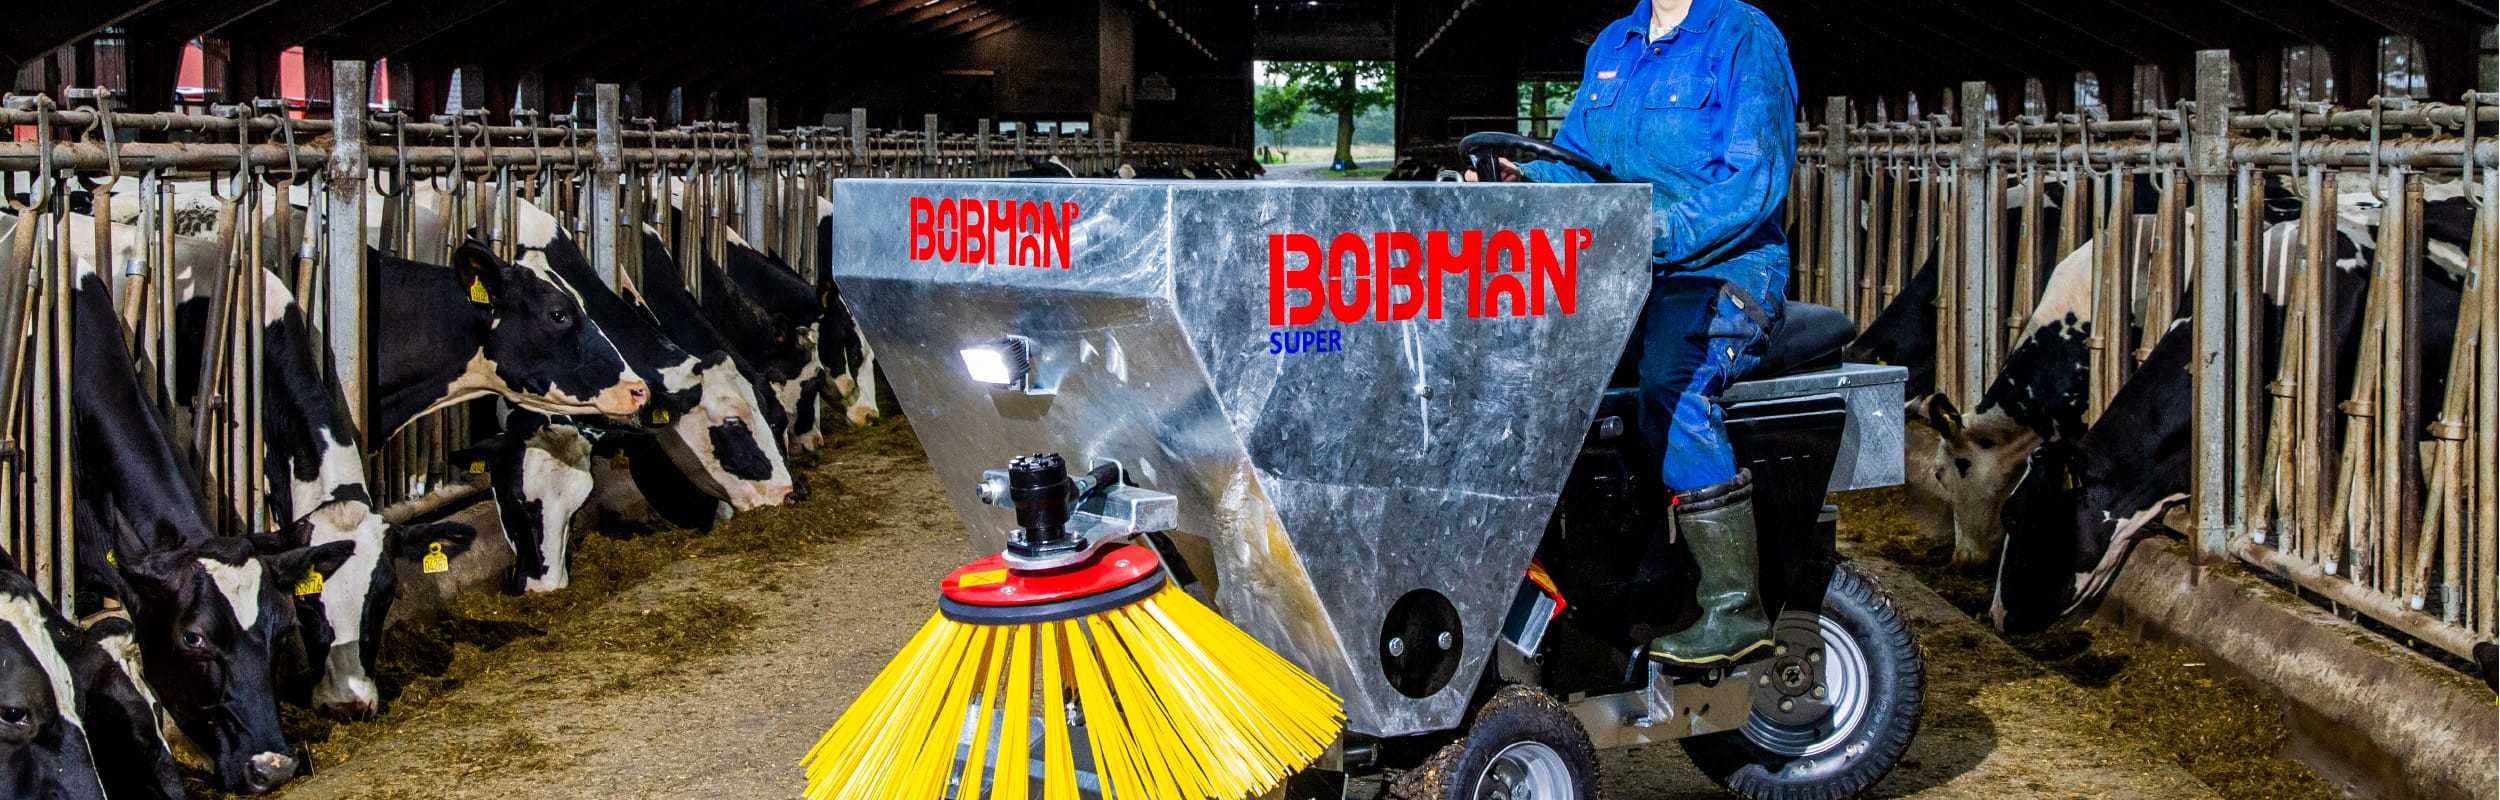 Bobman Super